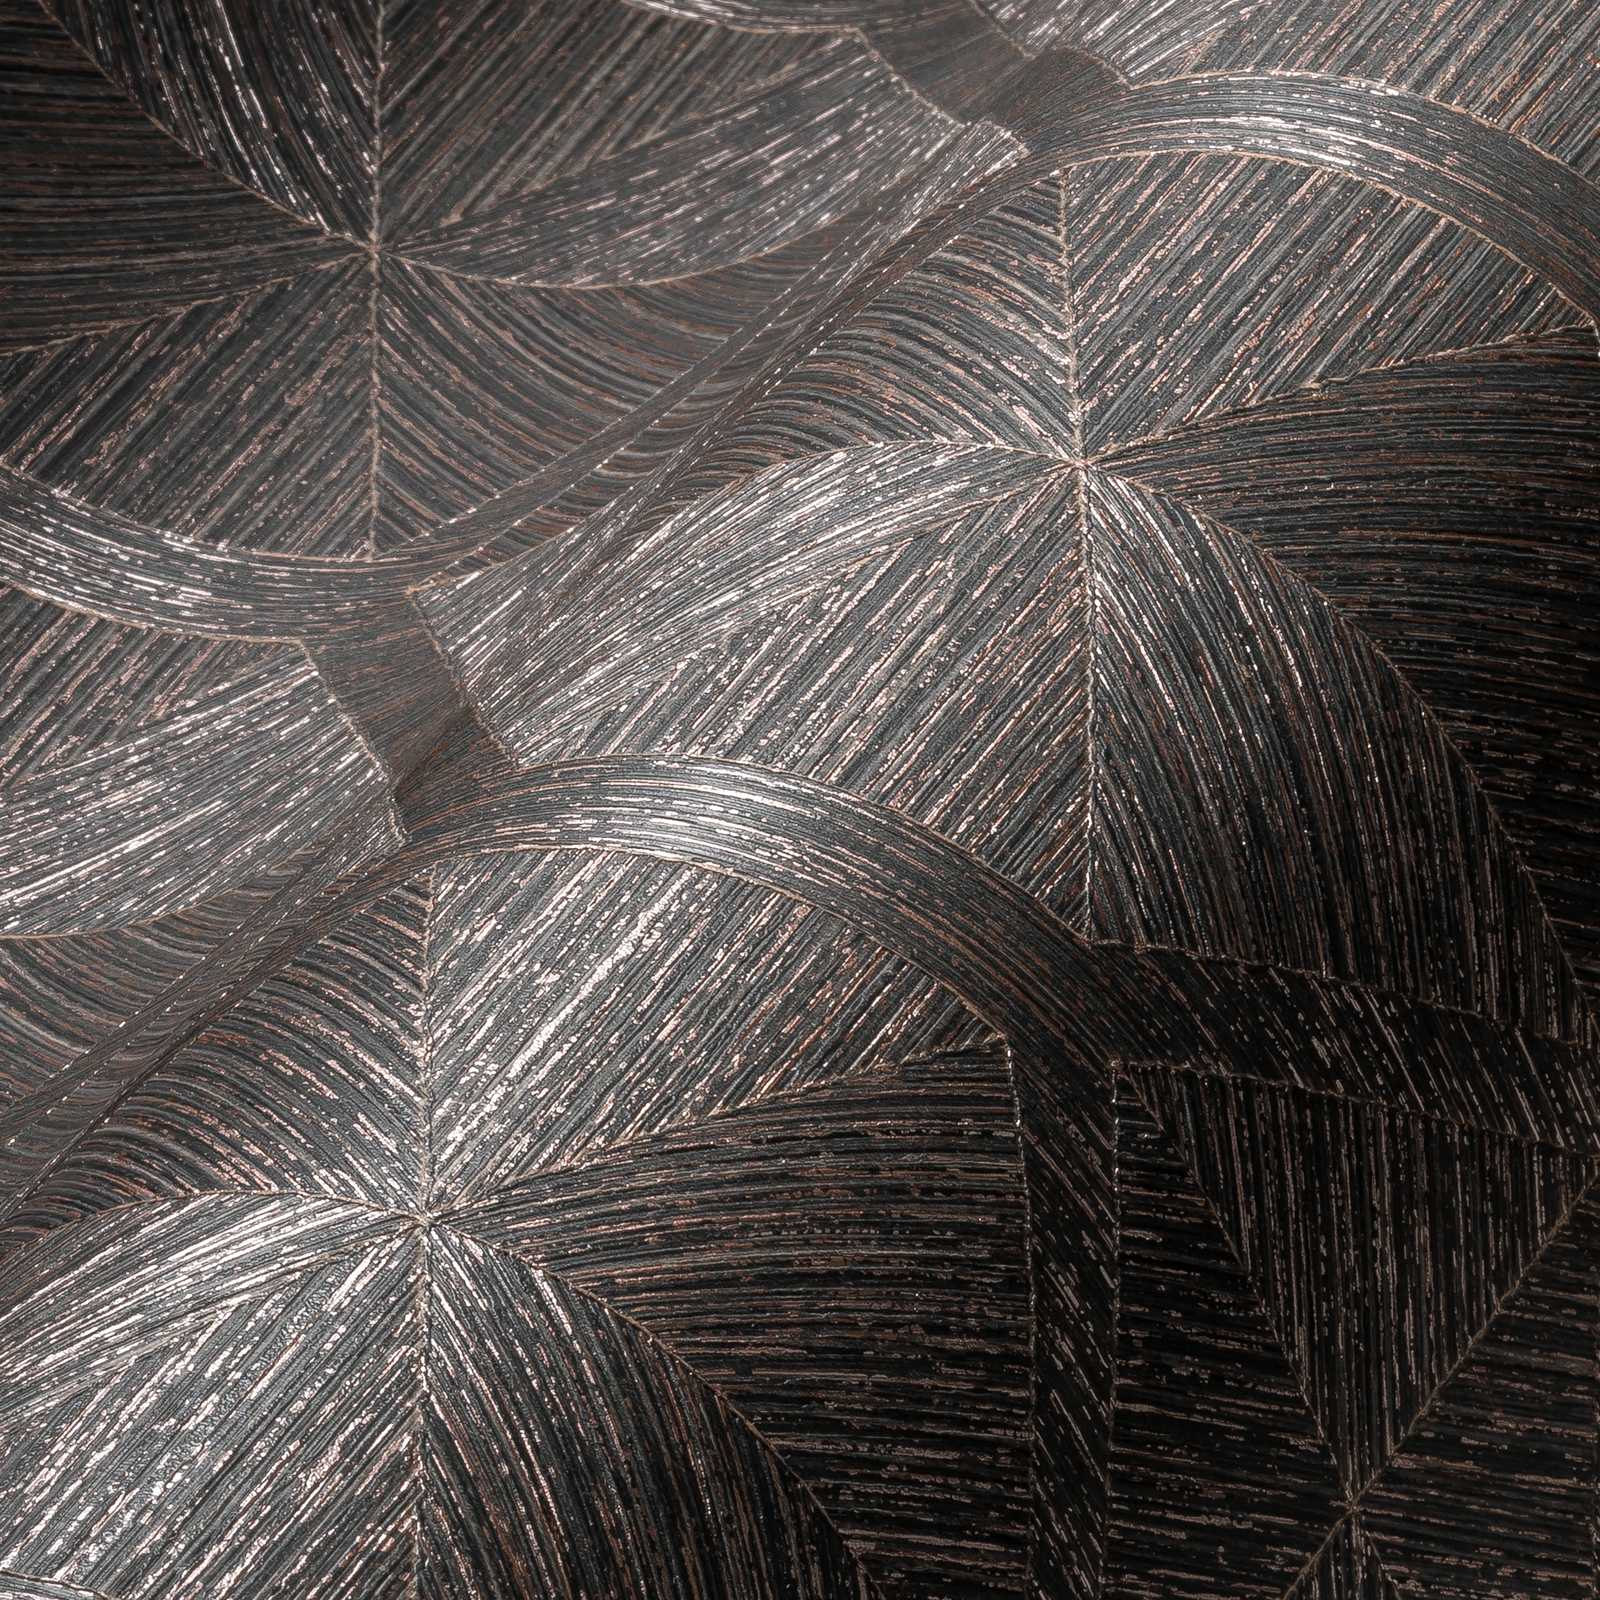             Wallpaper graphic pattern wood look with metallic effect - brown, metallic
        